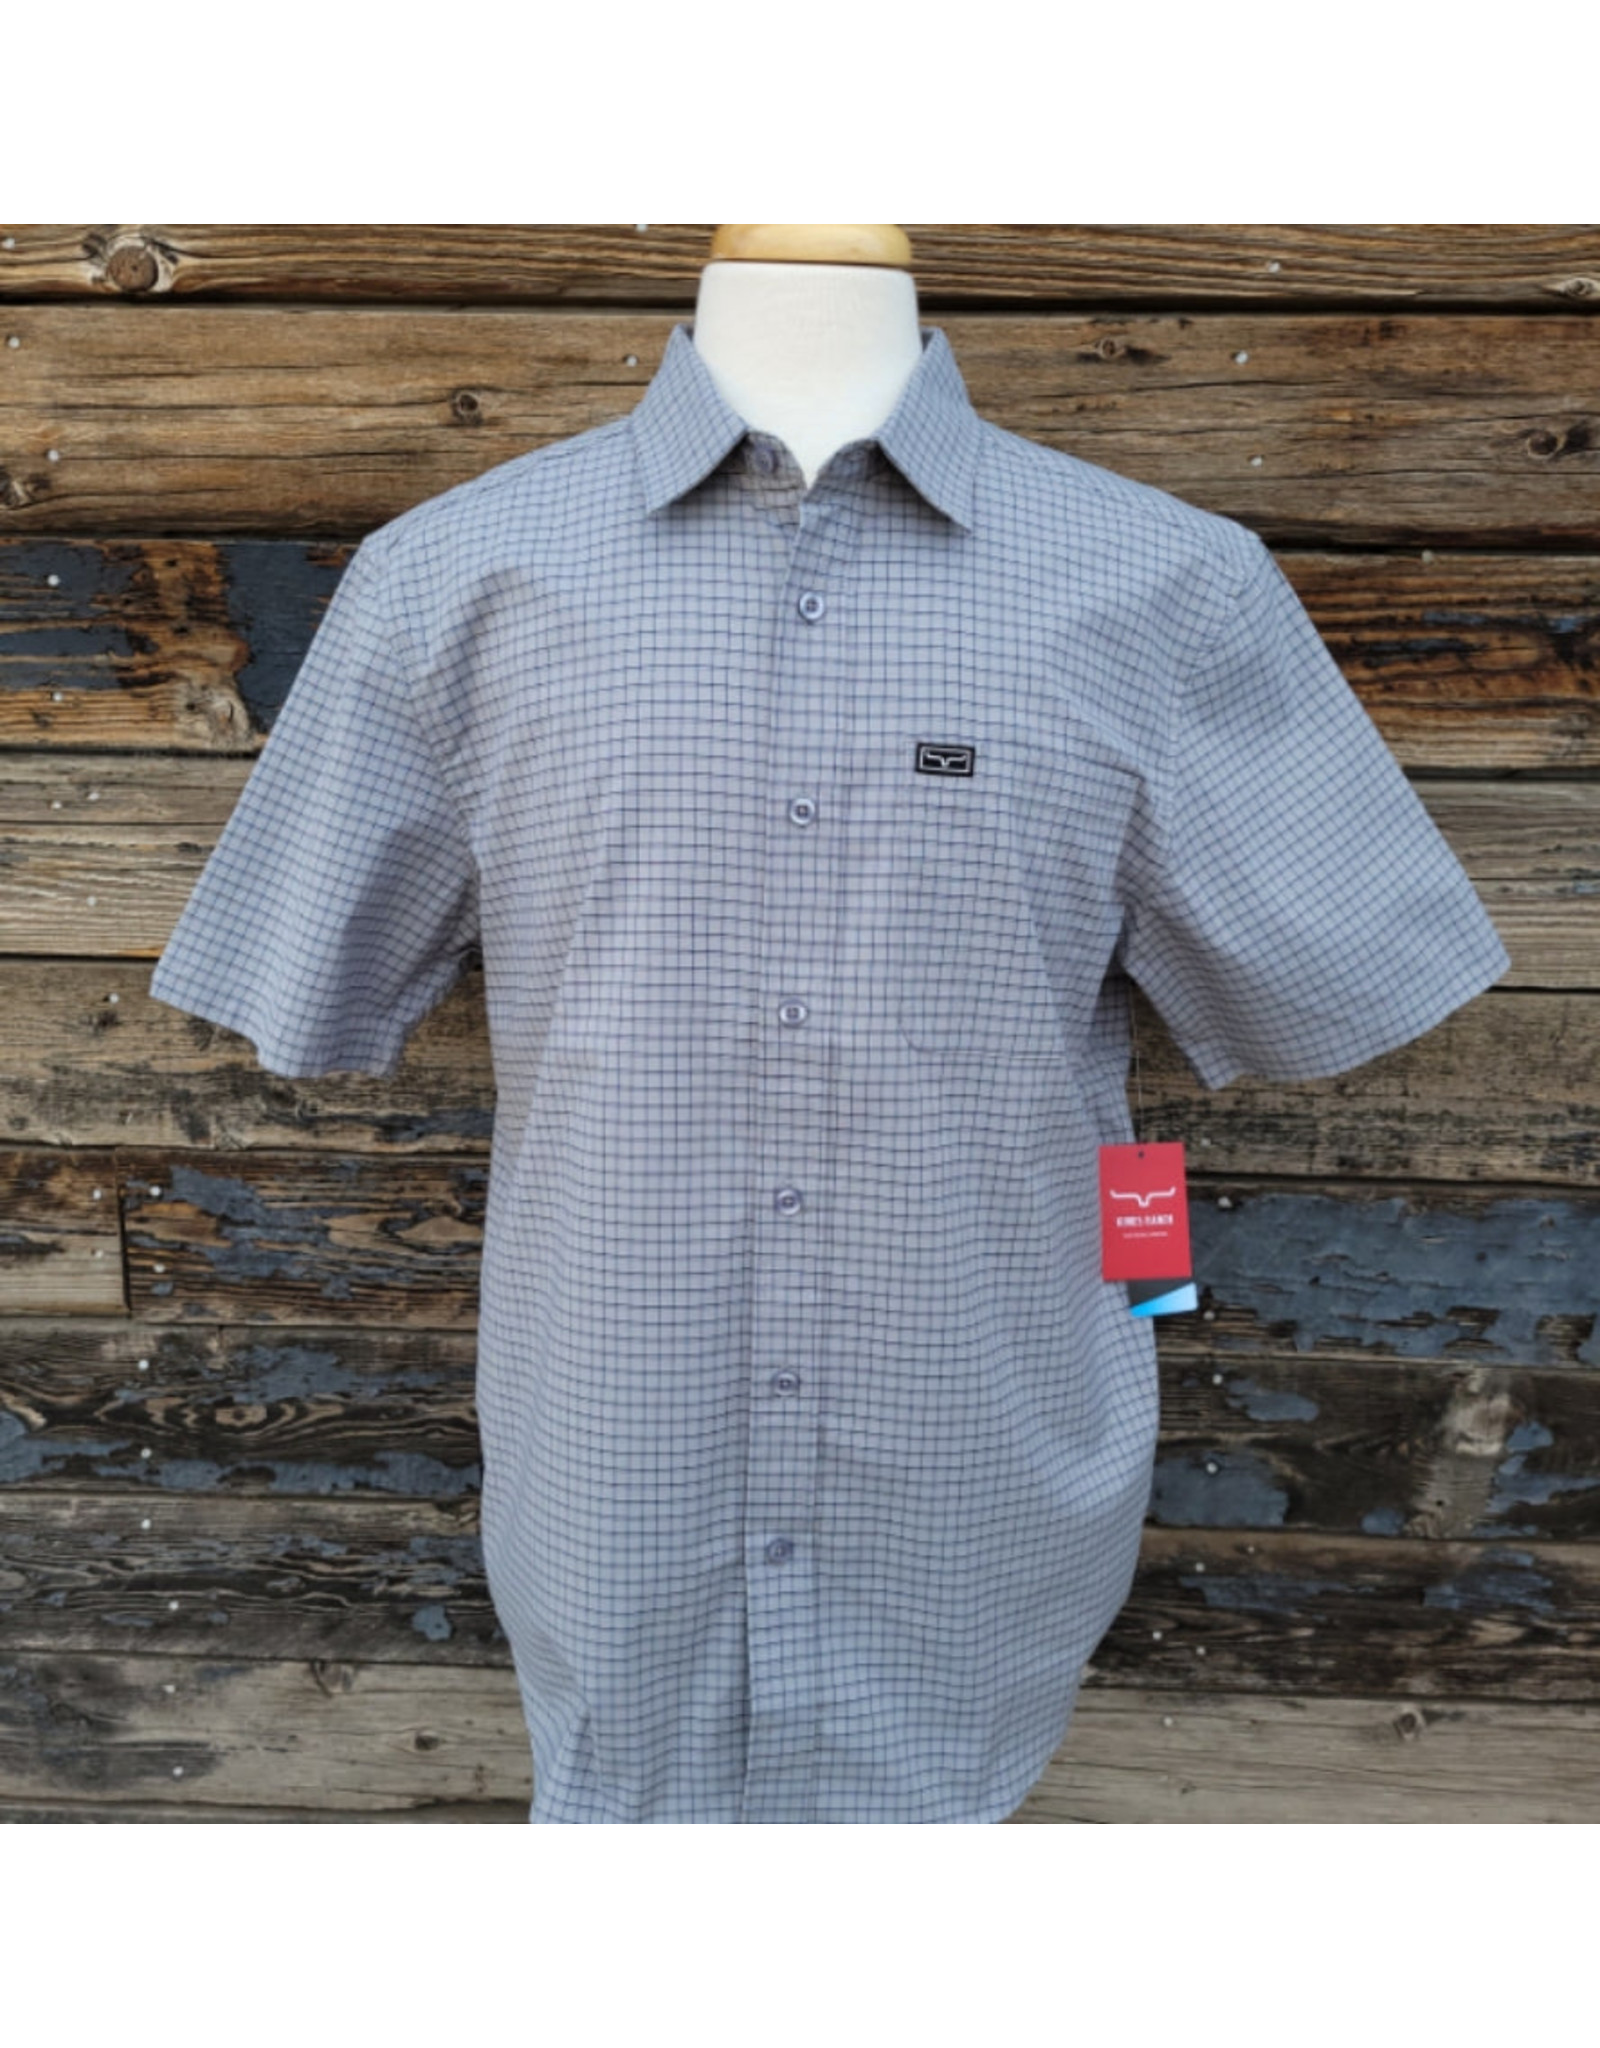 Kimes Ranch Kimes Ranch Men's Spyglass Blue Mini Check Short Sleeve Button-Down Western Shirt